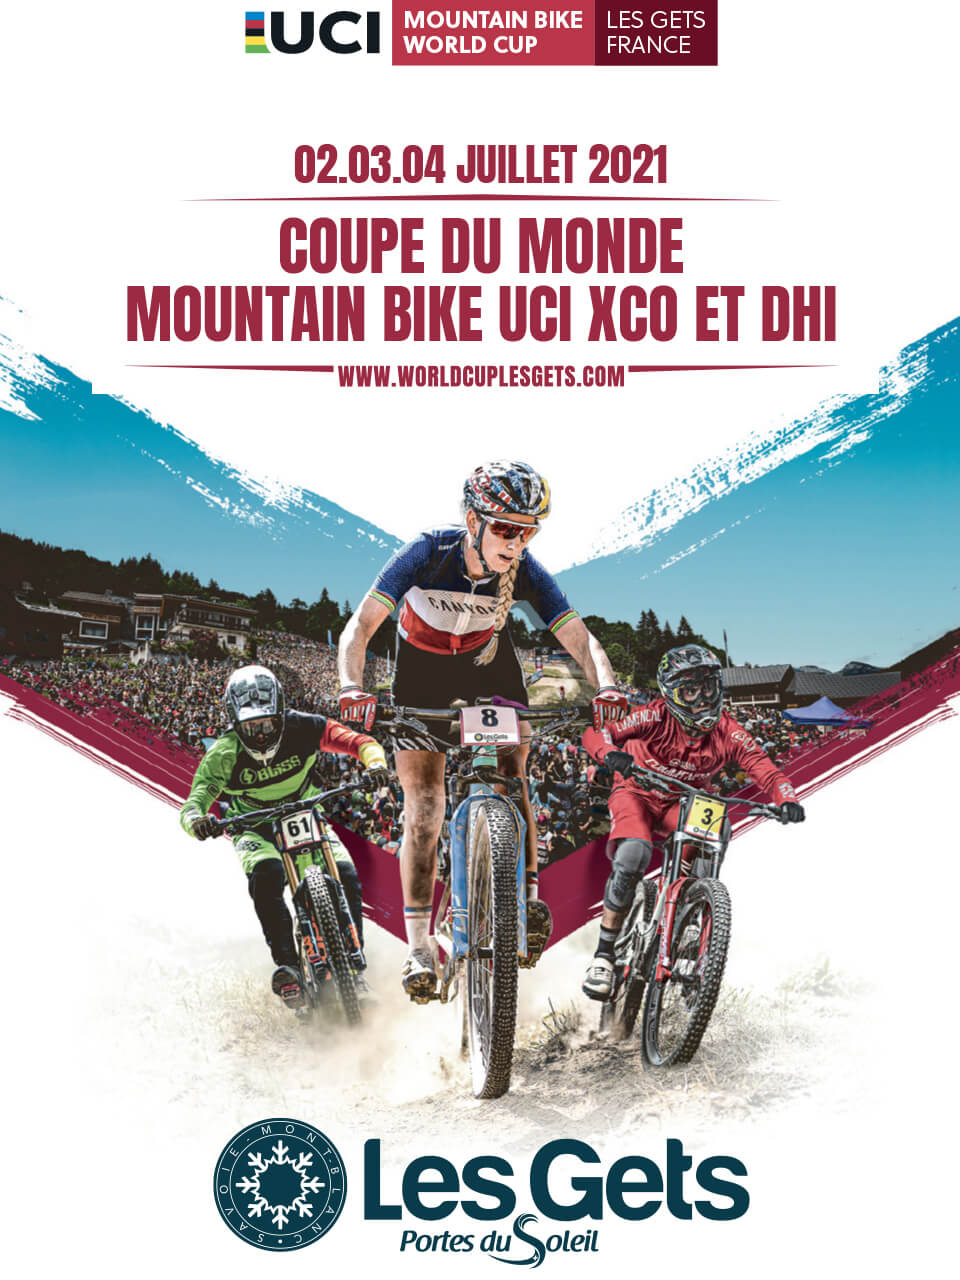 uci mountain bike 2020 schedule